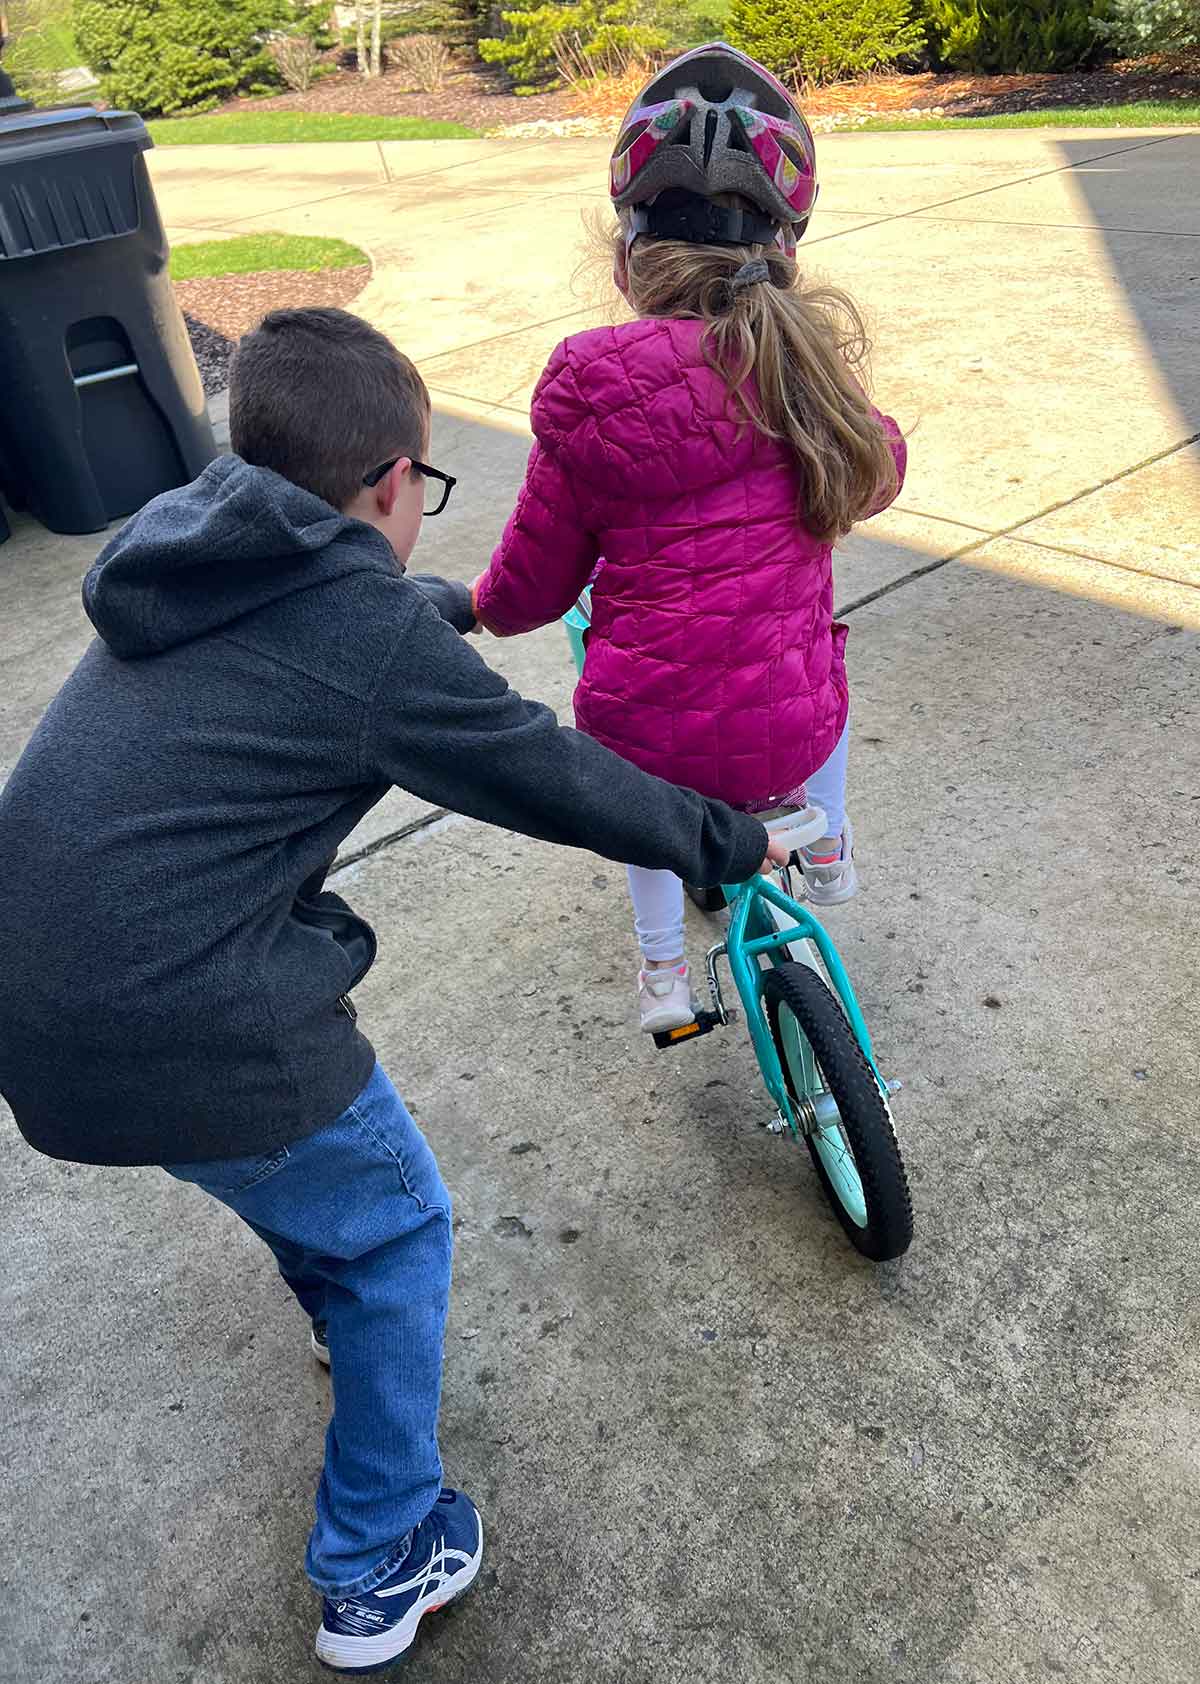 Boy helping a little girl in a pink jacket ride a bike.